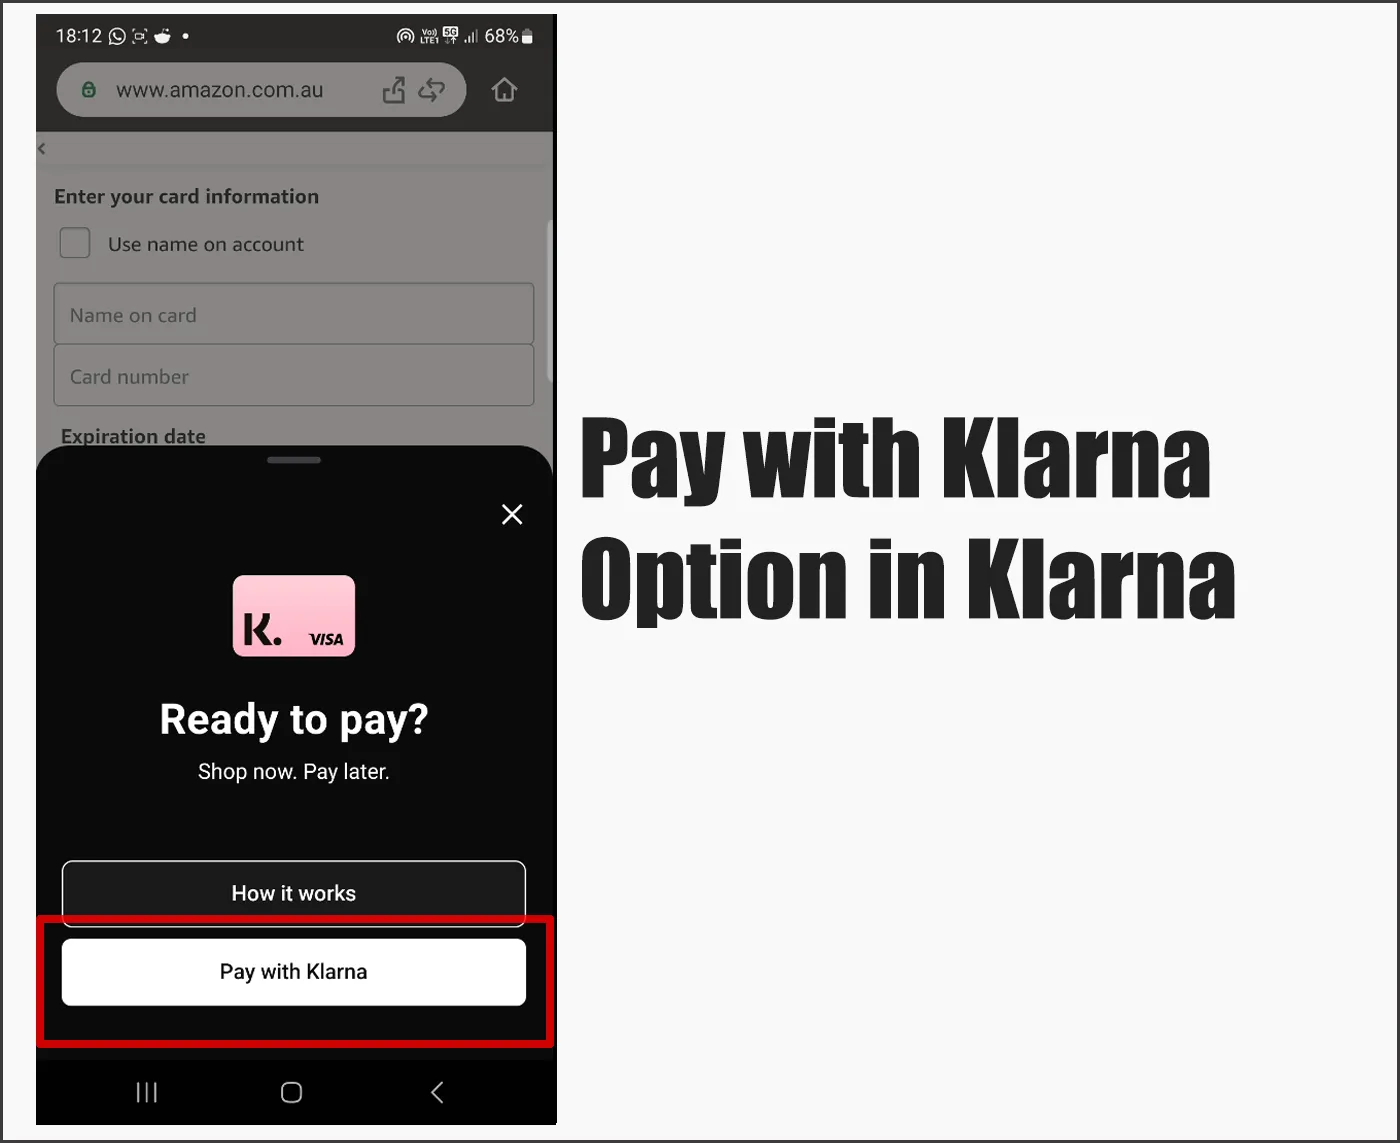 Pay with Klarna Option in Klarna